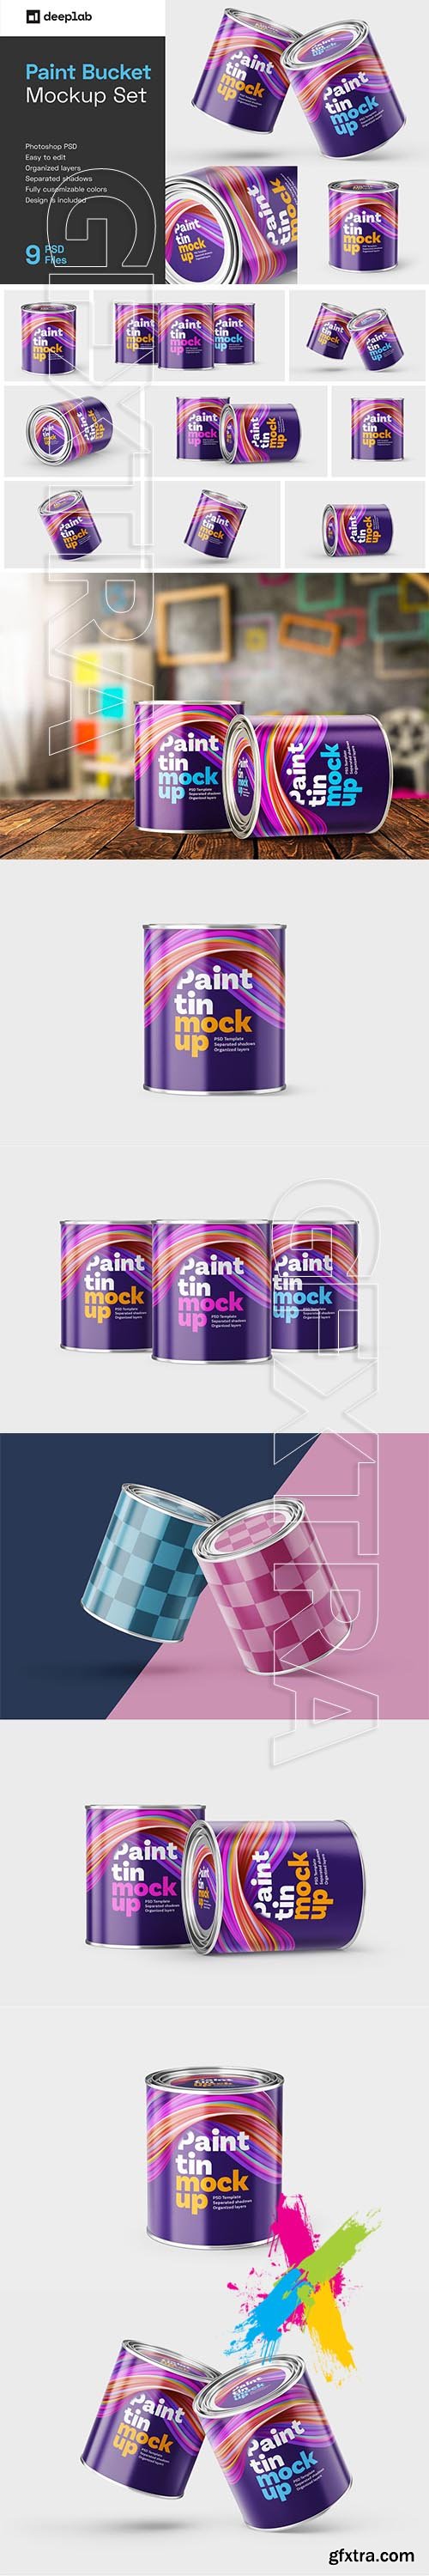 CreativeMarket - Paint Bucket Mockup Set 5806811